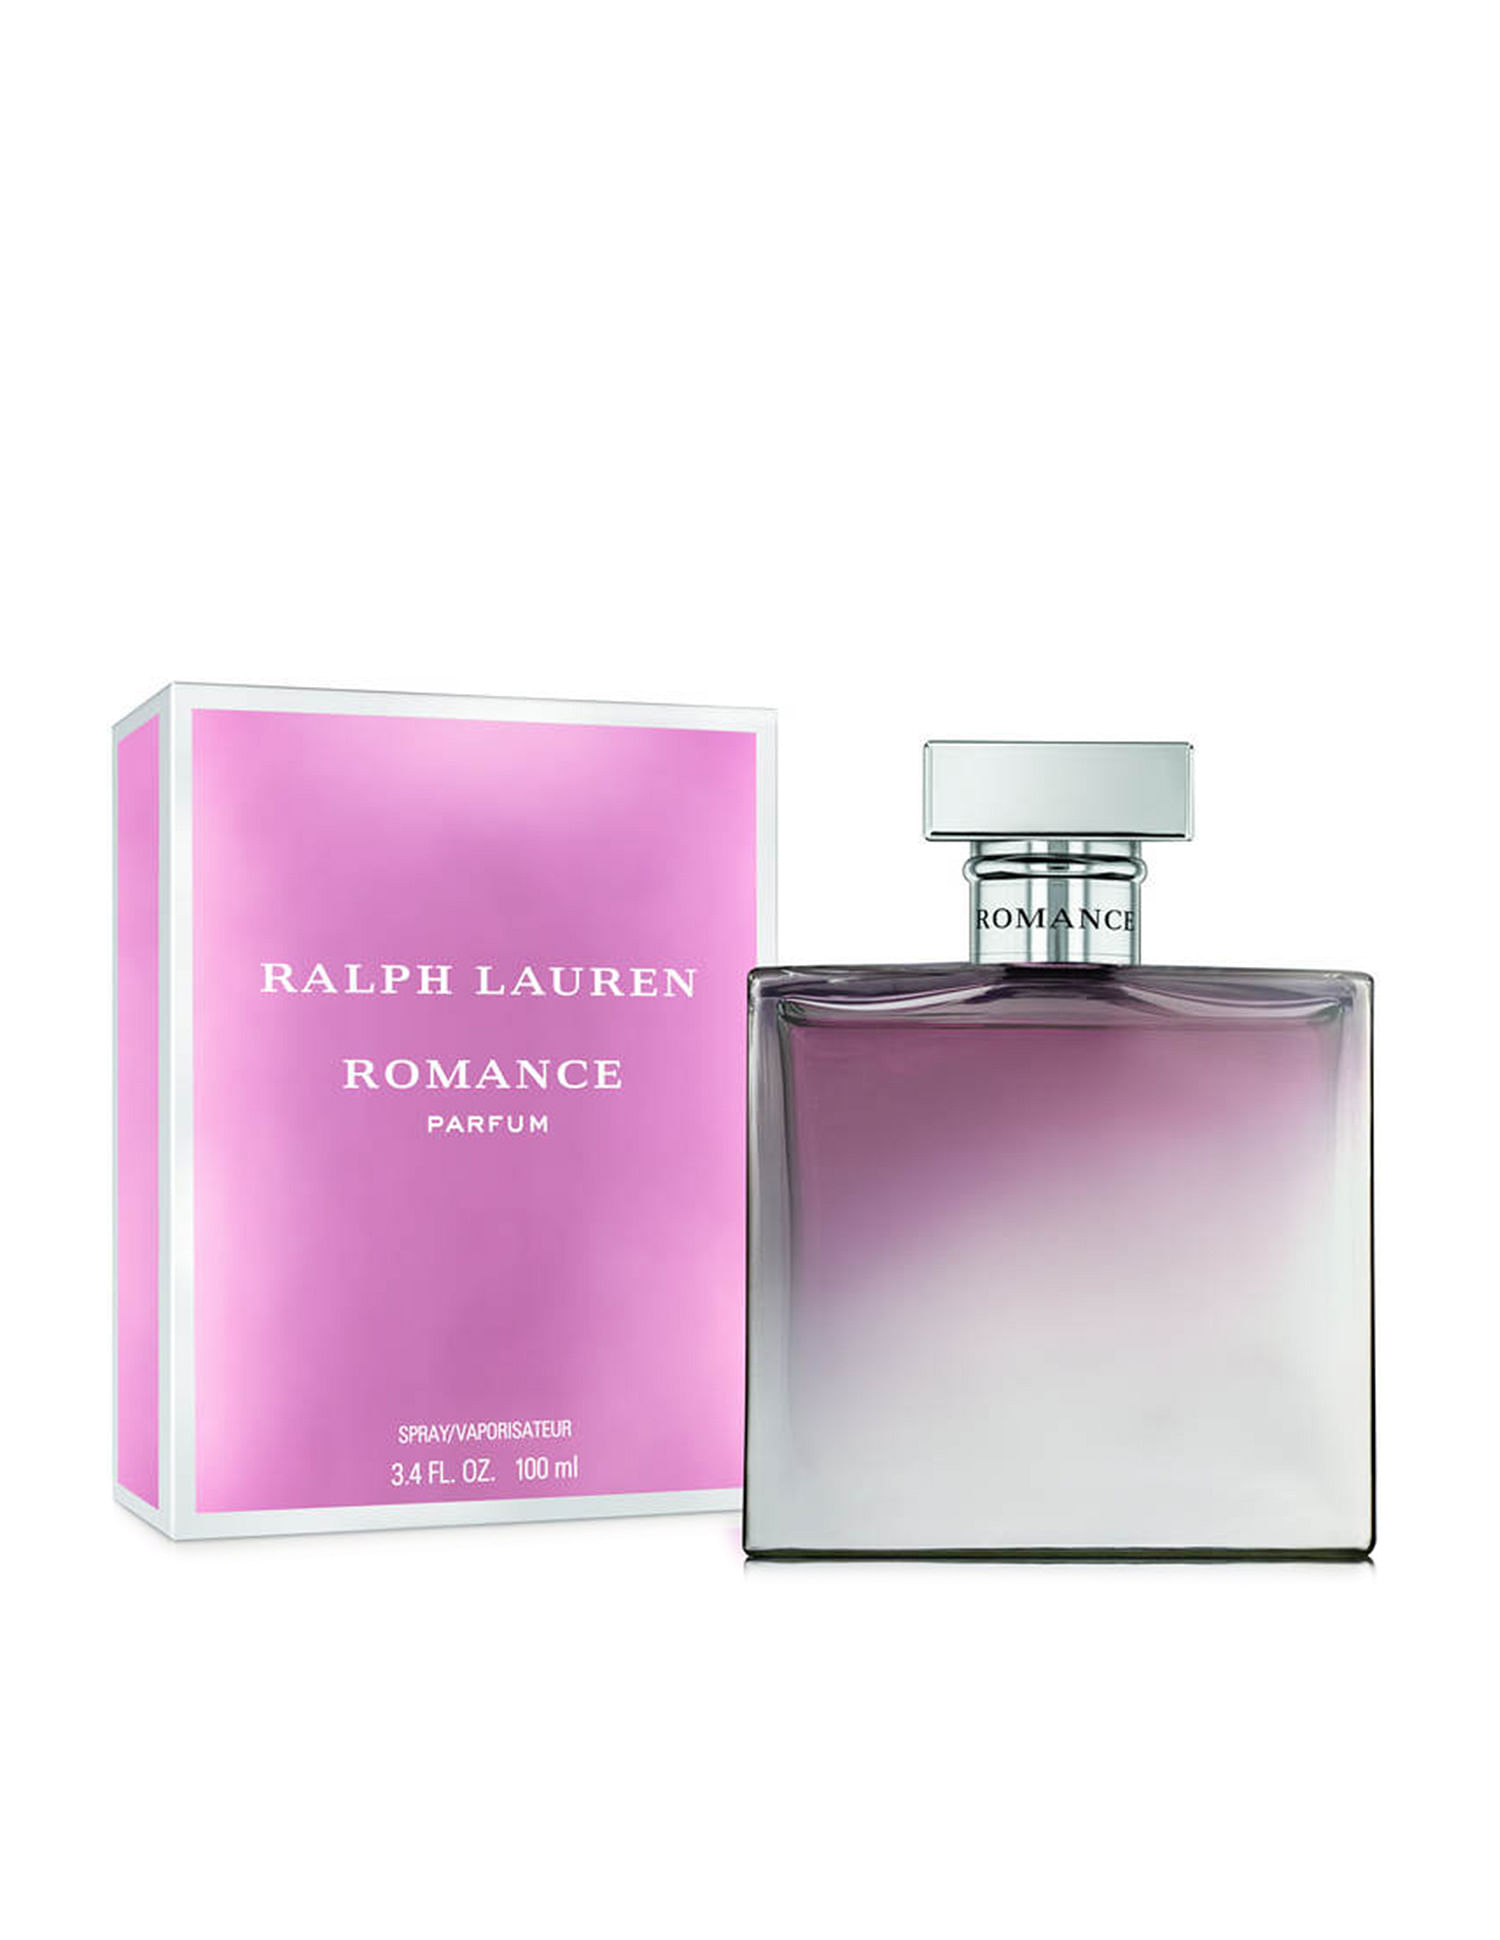 Buy RALPH LAUREN Romance Parfum - NNNOW.com